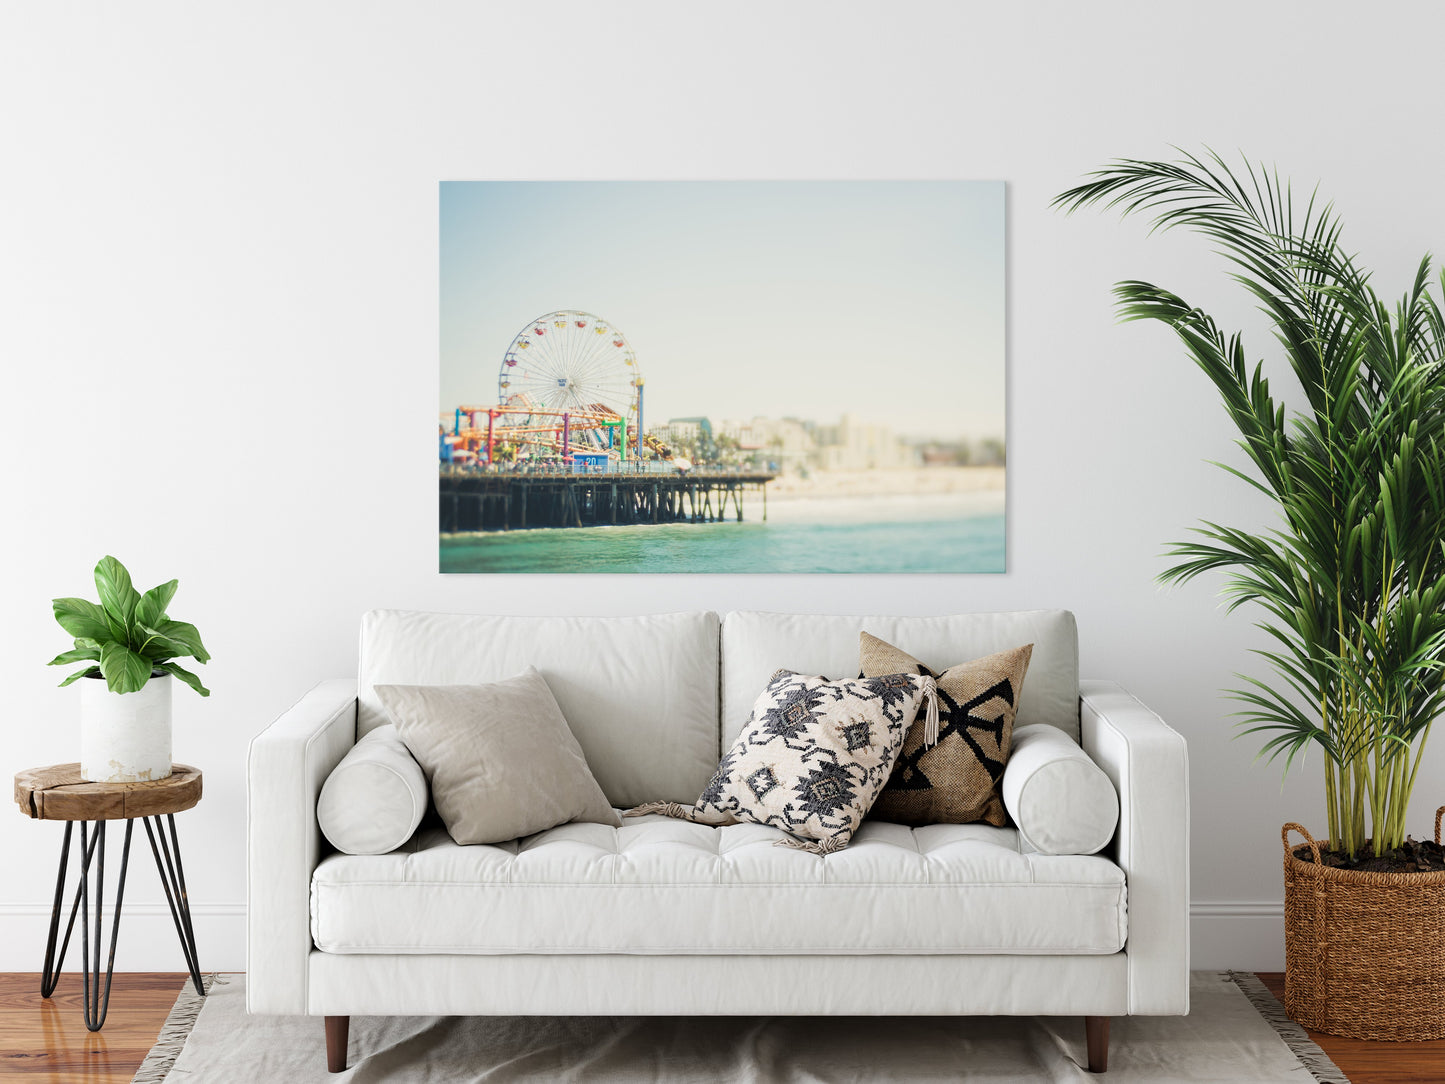 Santa Monica Pier photograph as Canvas in a Living Room Wall